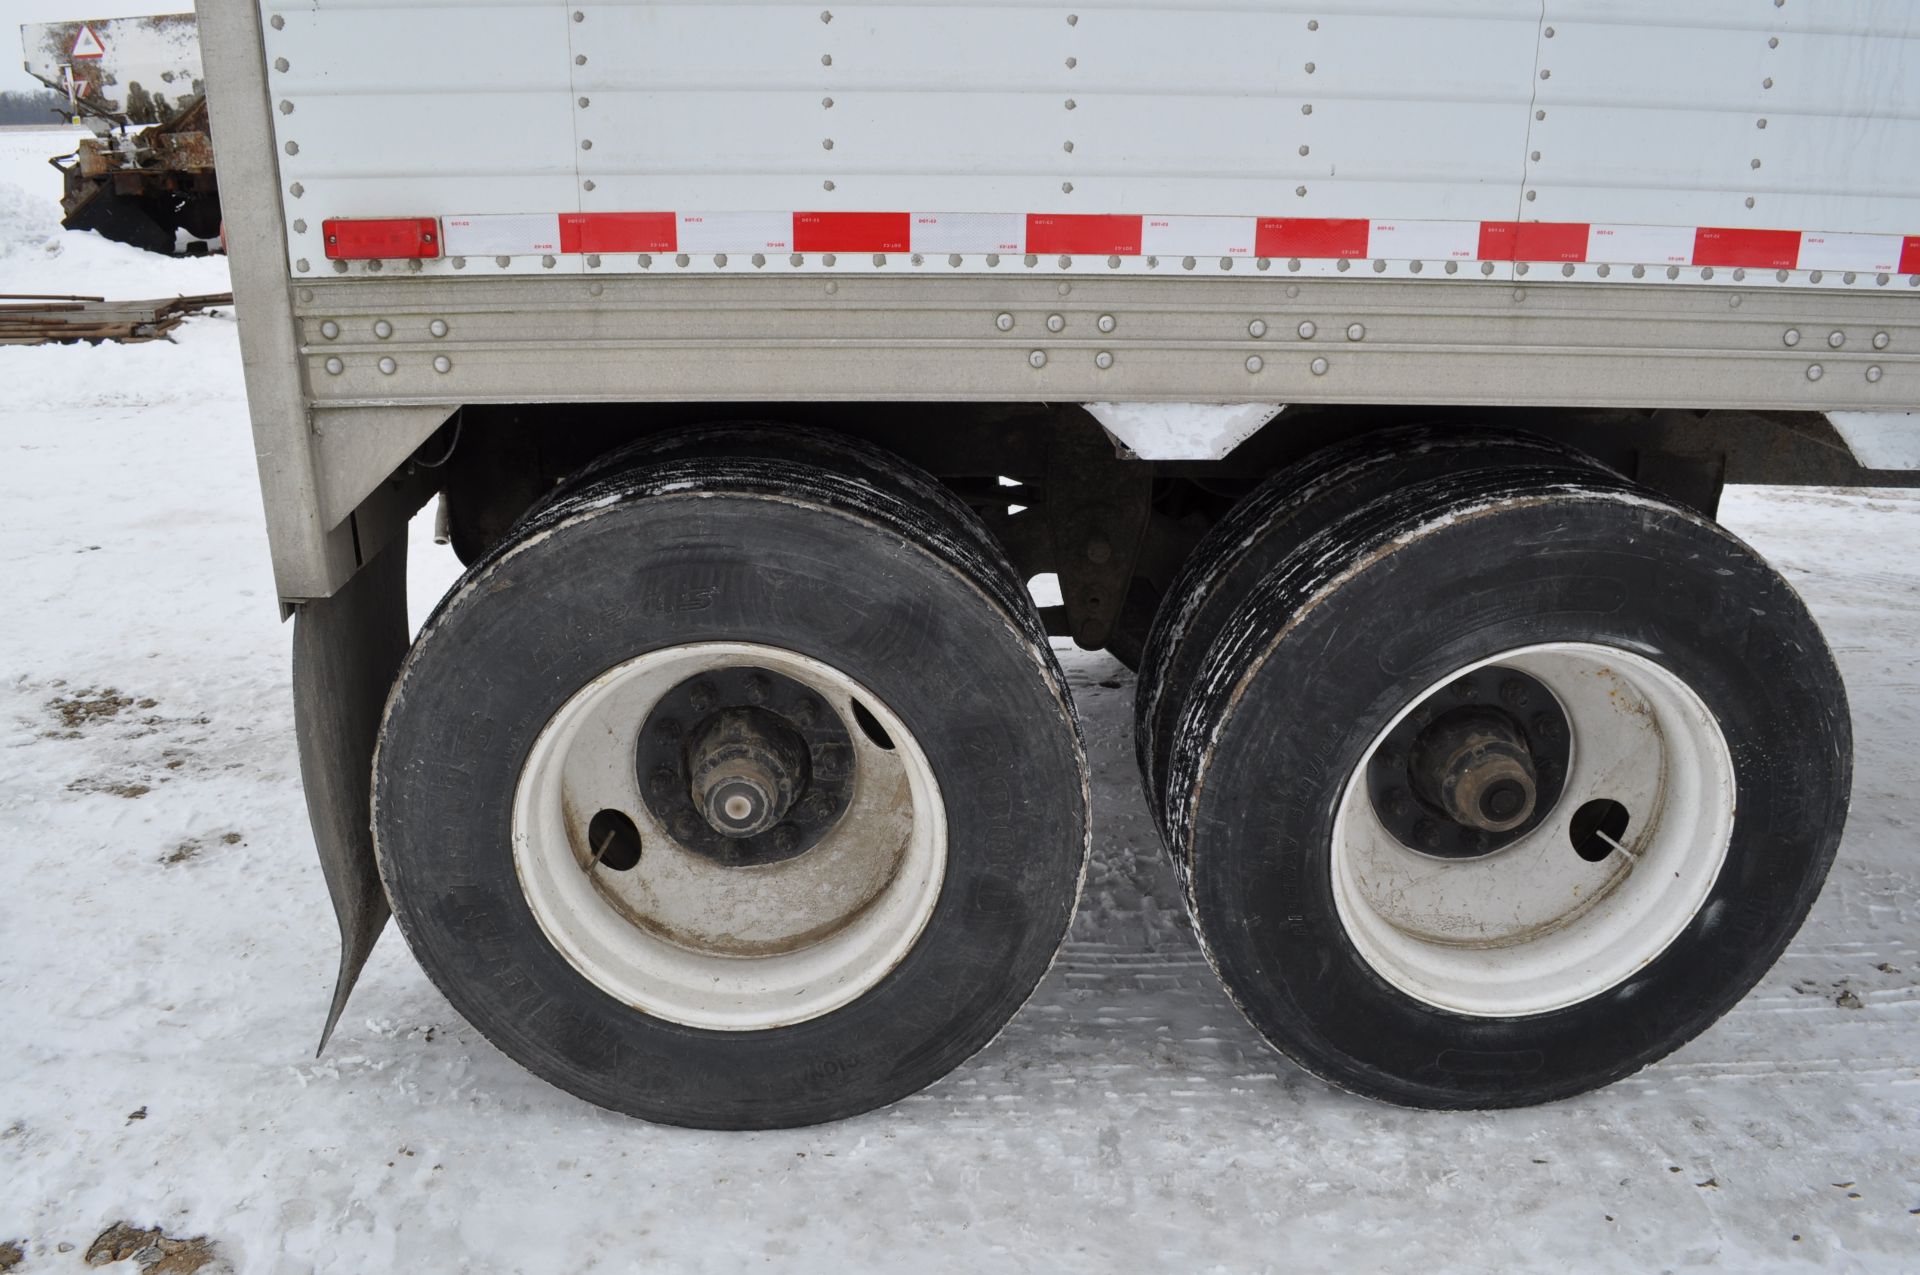 1993 42’ Timpte hopper bottom trailer, spring ride, 11R24.5 tires, roll tarp, VIN H42221PB084815 - Image 17 of 19